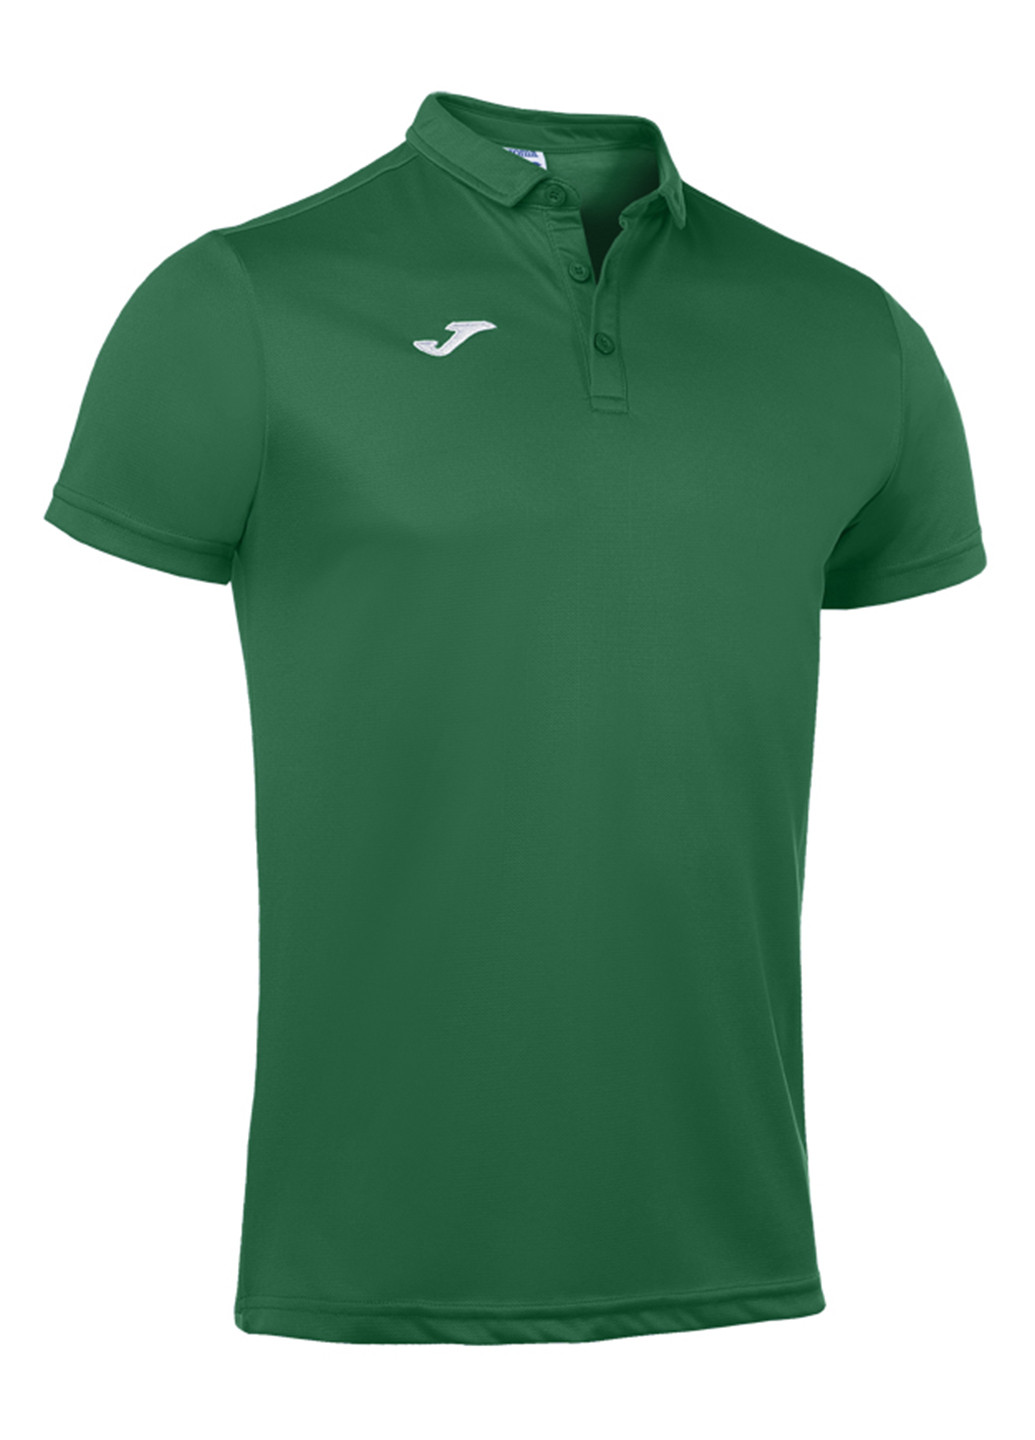 Зеленая футболка-поло для мужчин Joma с логотипом